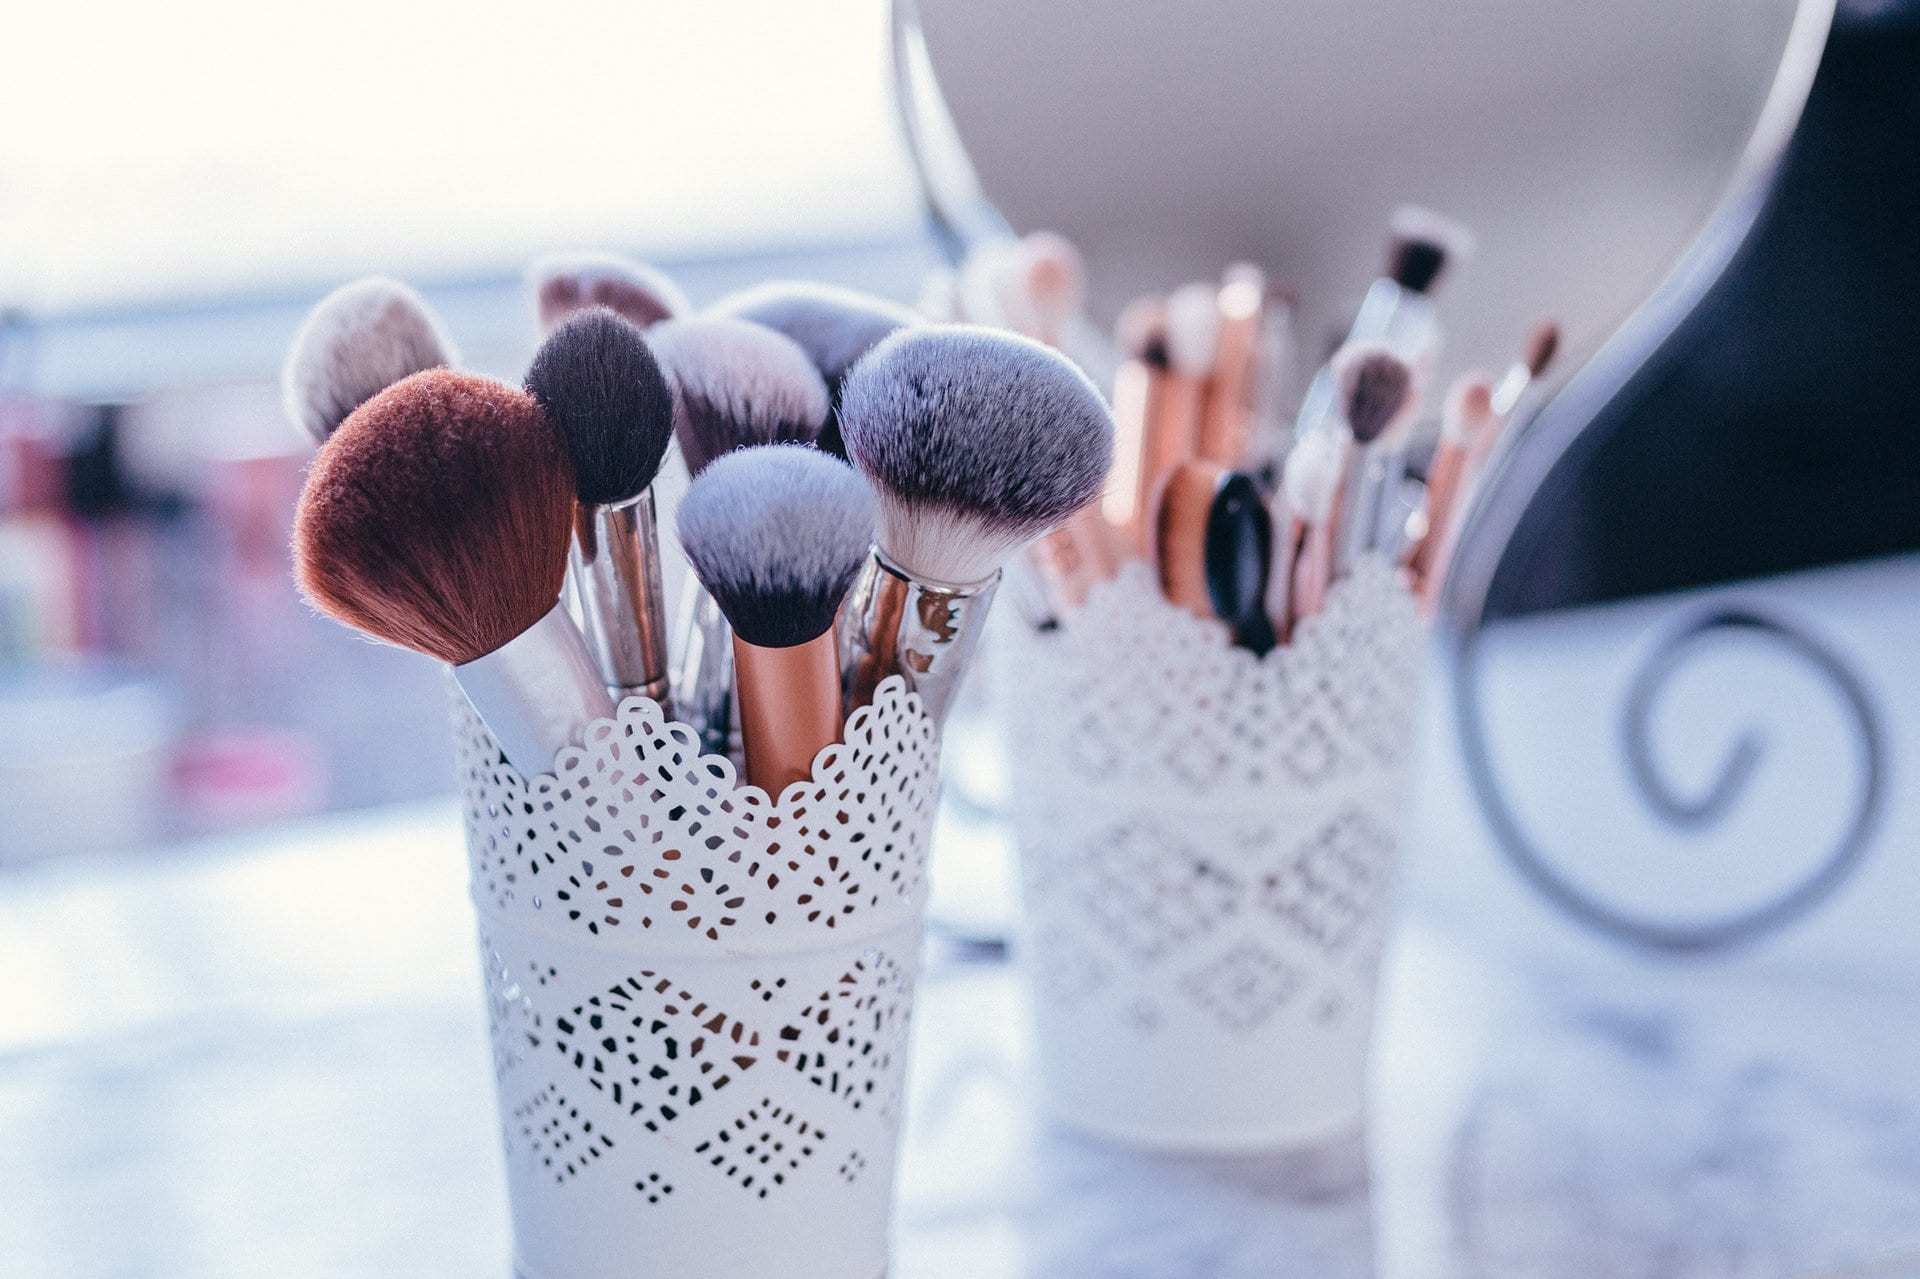 How long can you keep makeup brushes